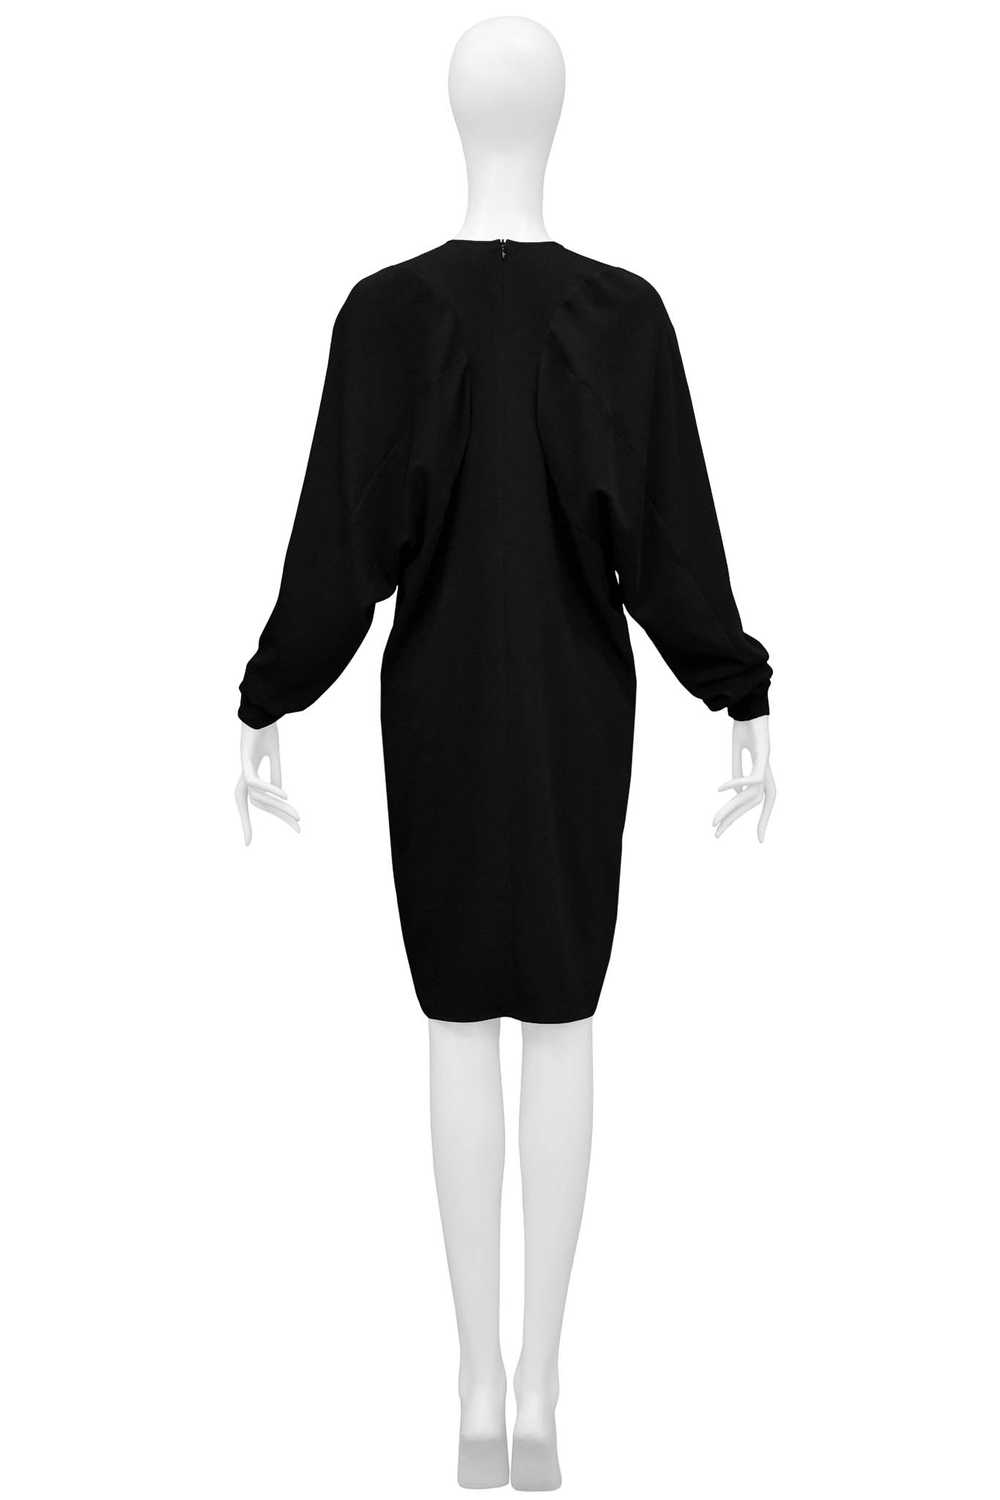 MARGIELA BLACK DRESS WITH LONG DOLMAN SLEEVES - image 4